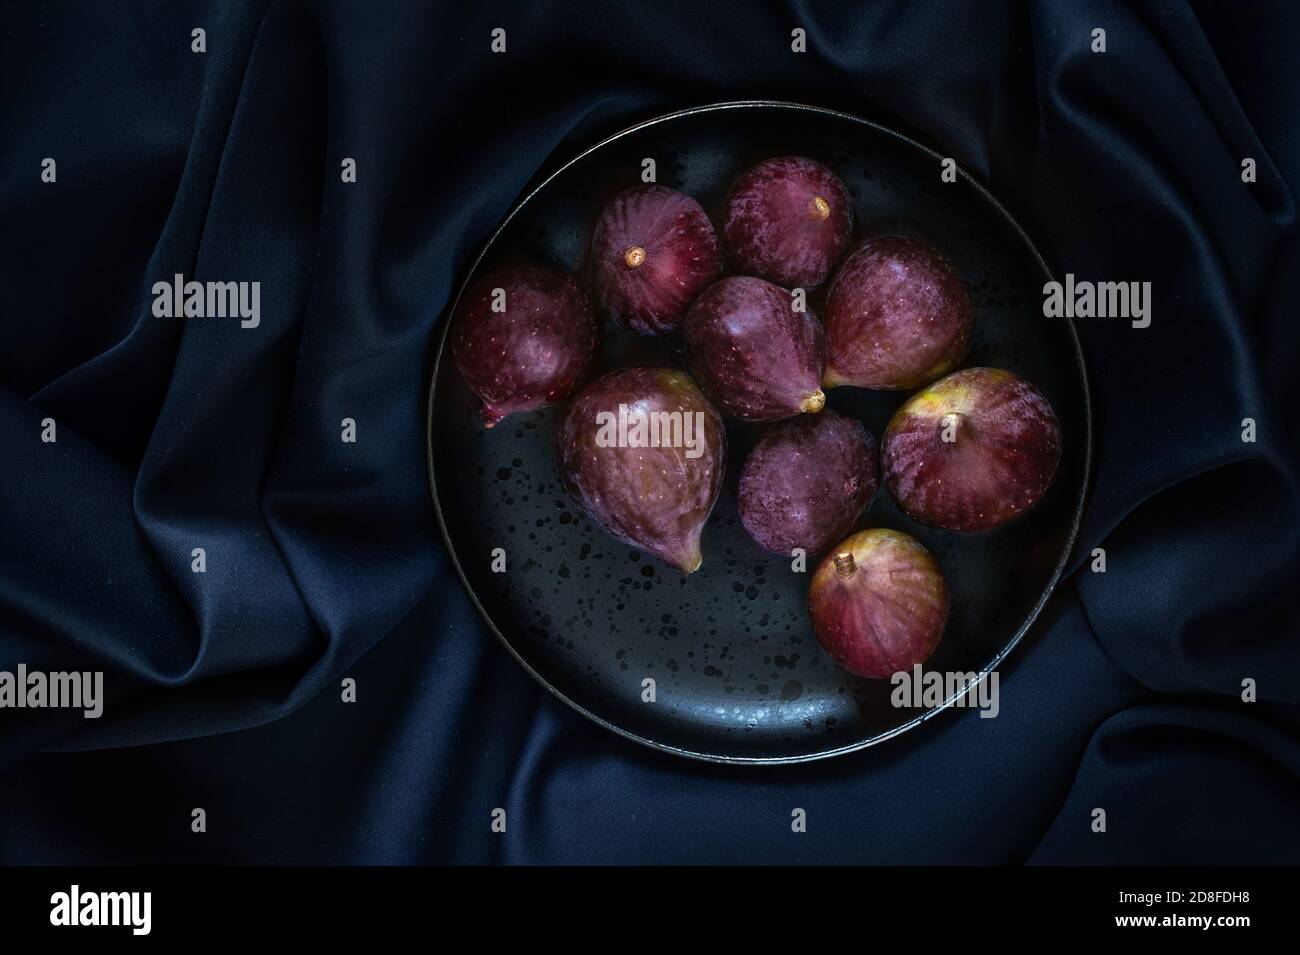 Fresh ripe figs on table black background. Dark Food photo Stock Photo